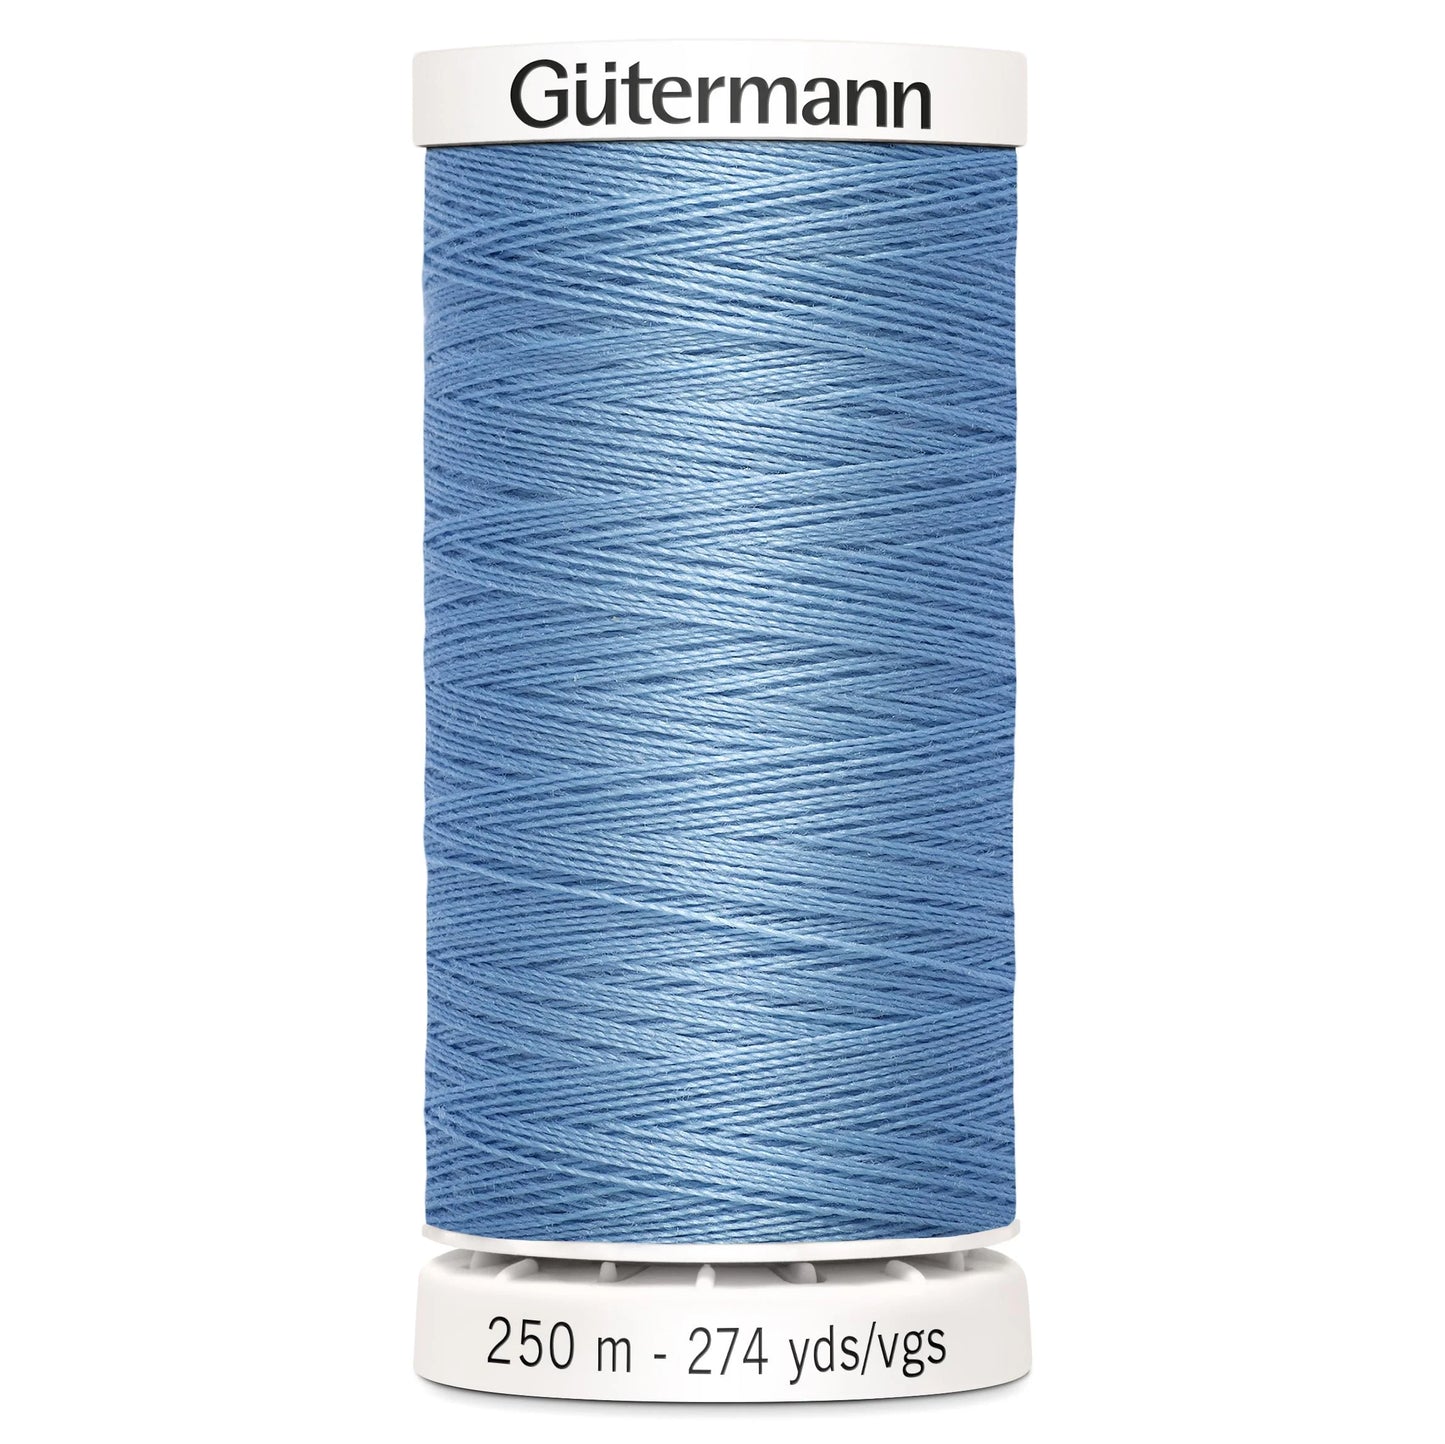 143 Gutermann Sew All 250m - Baby Blue